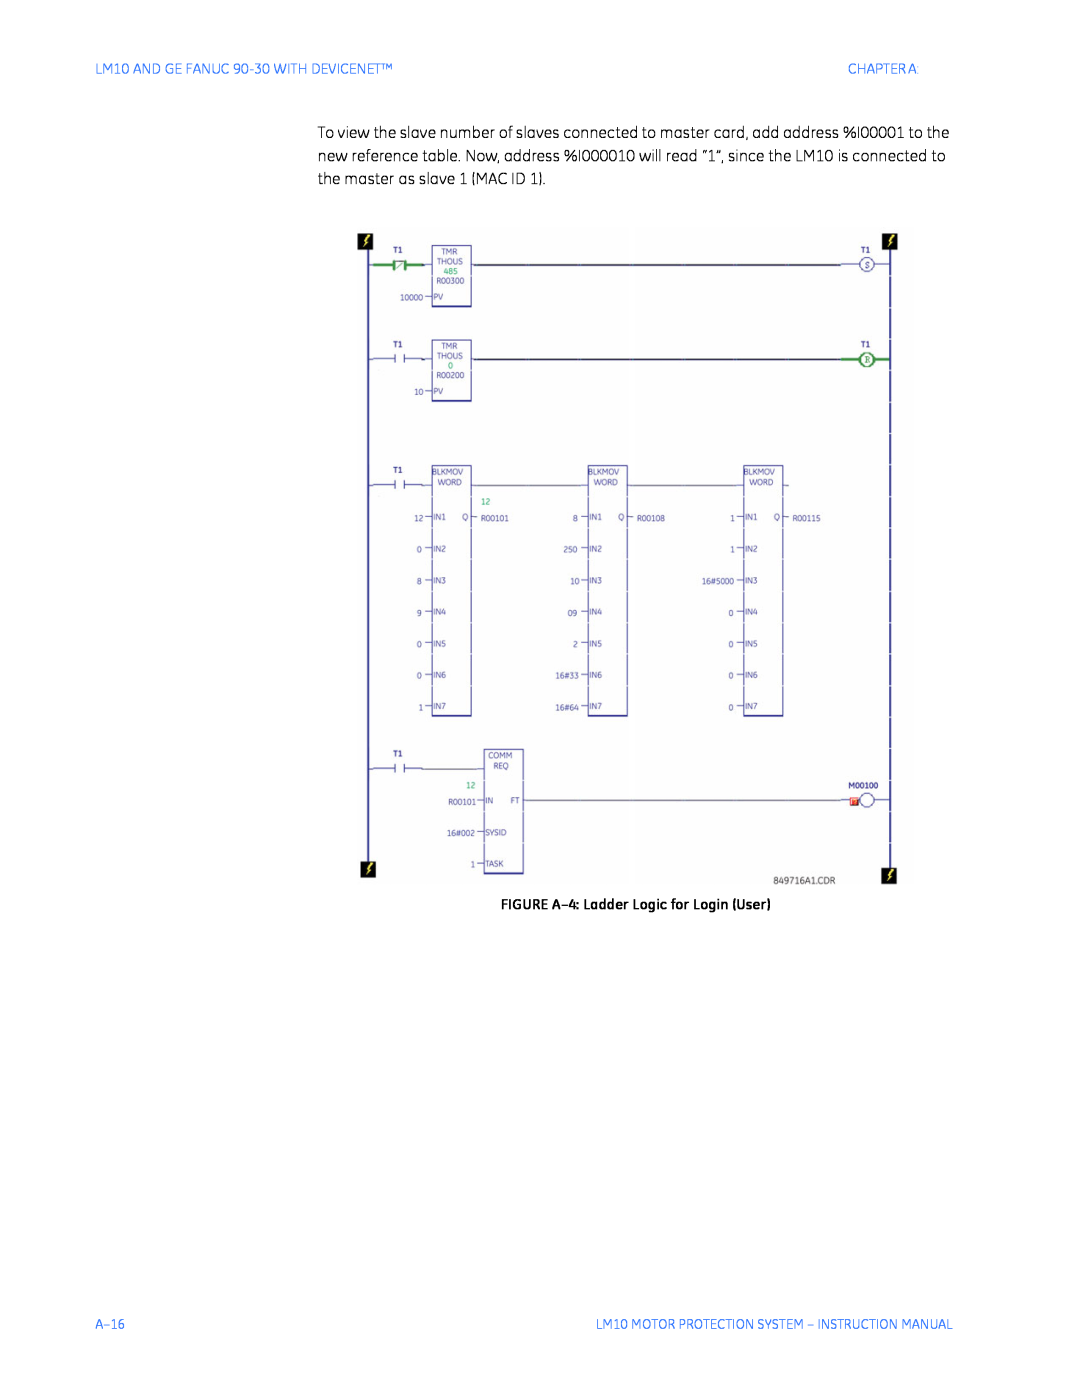 GE Motor Protection System, LM10 instruction manual FIGURE A-4 Ladder Logic for Login User, Chapter A 